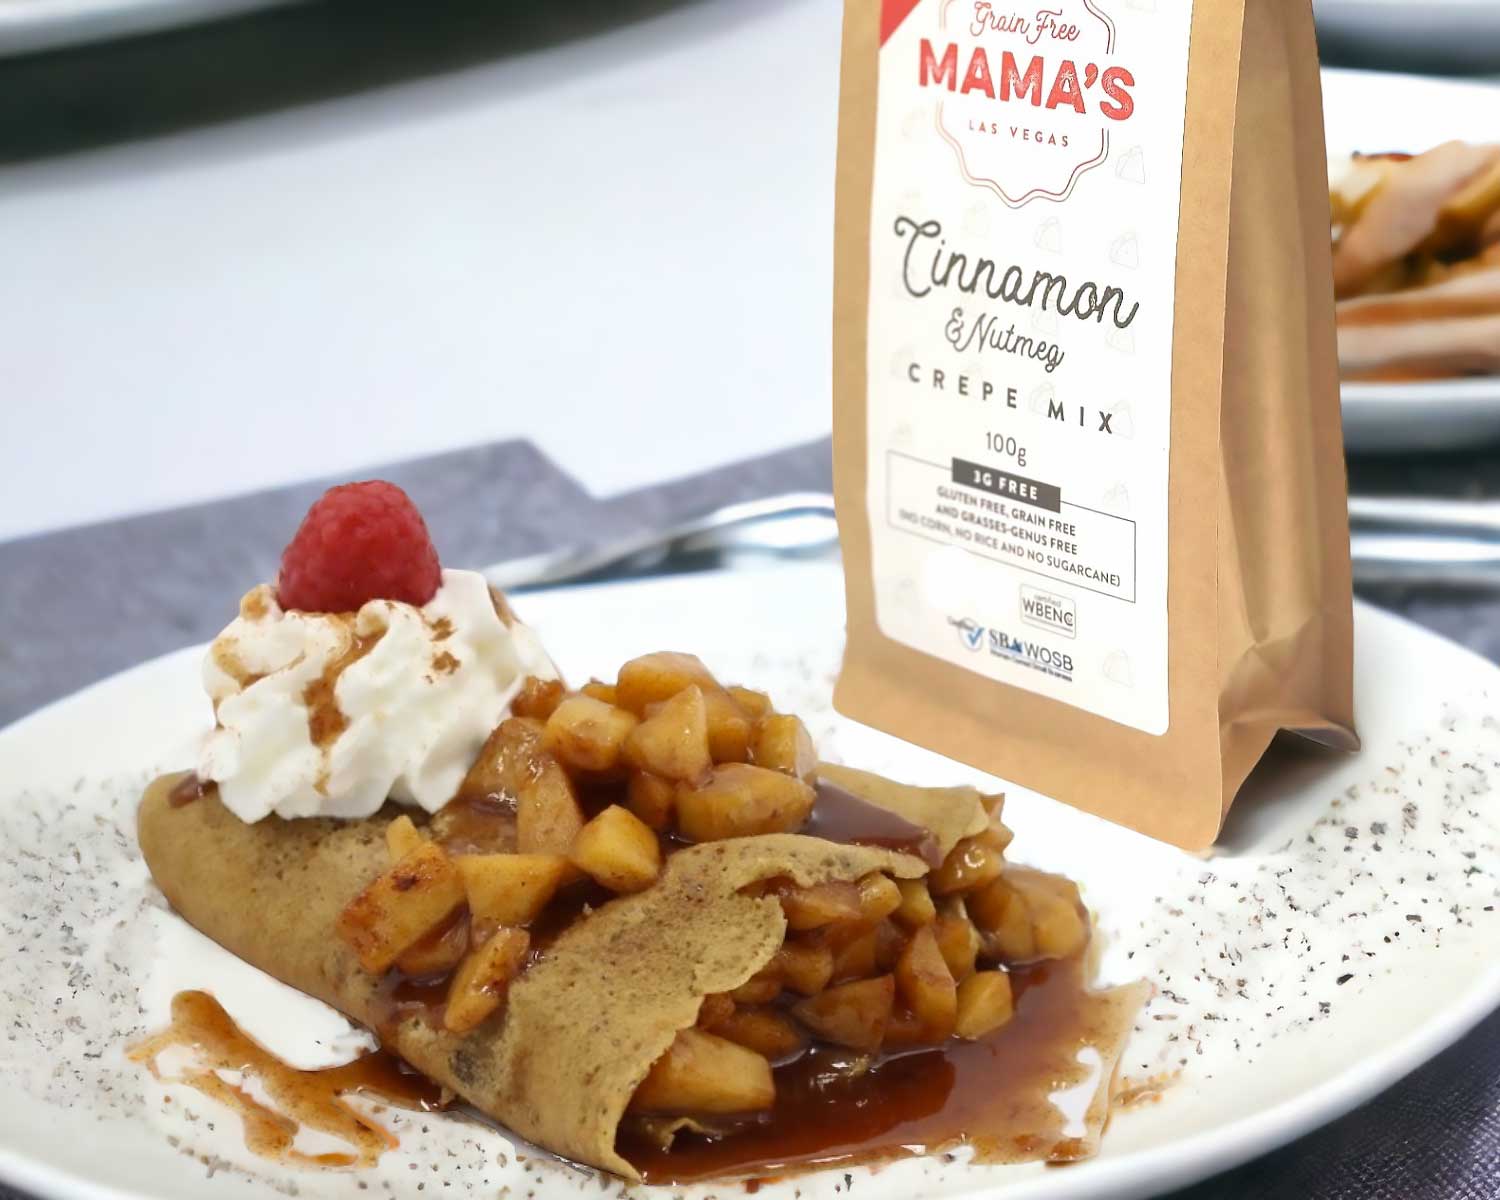 Gourmet Grain Free Mama's Original Cinnamon & Nutmeg Crepe Mix